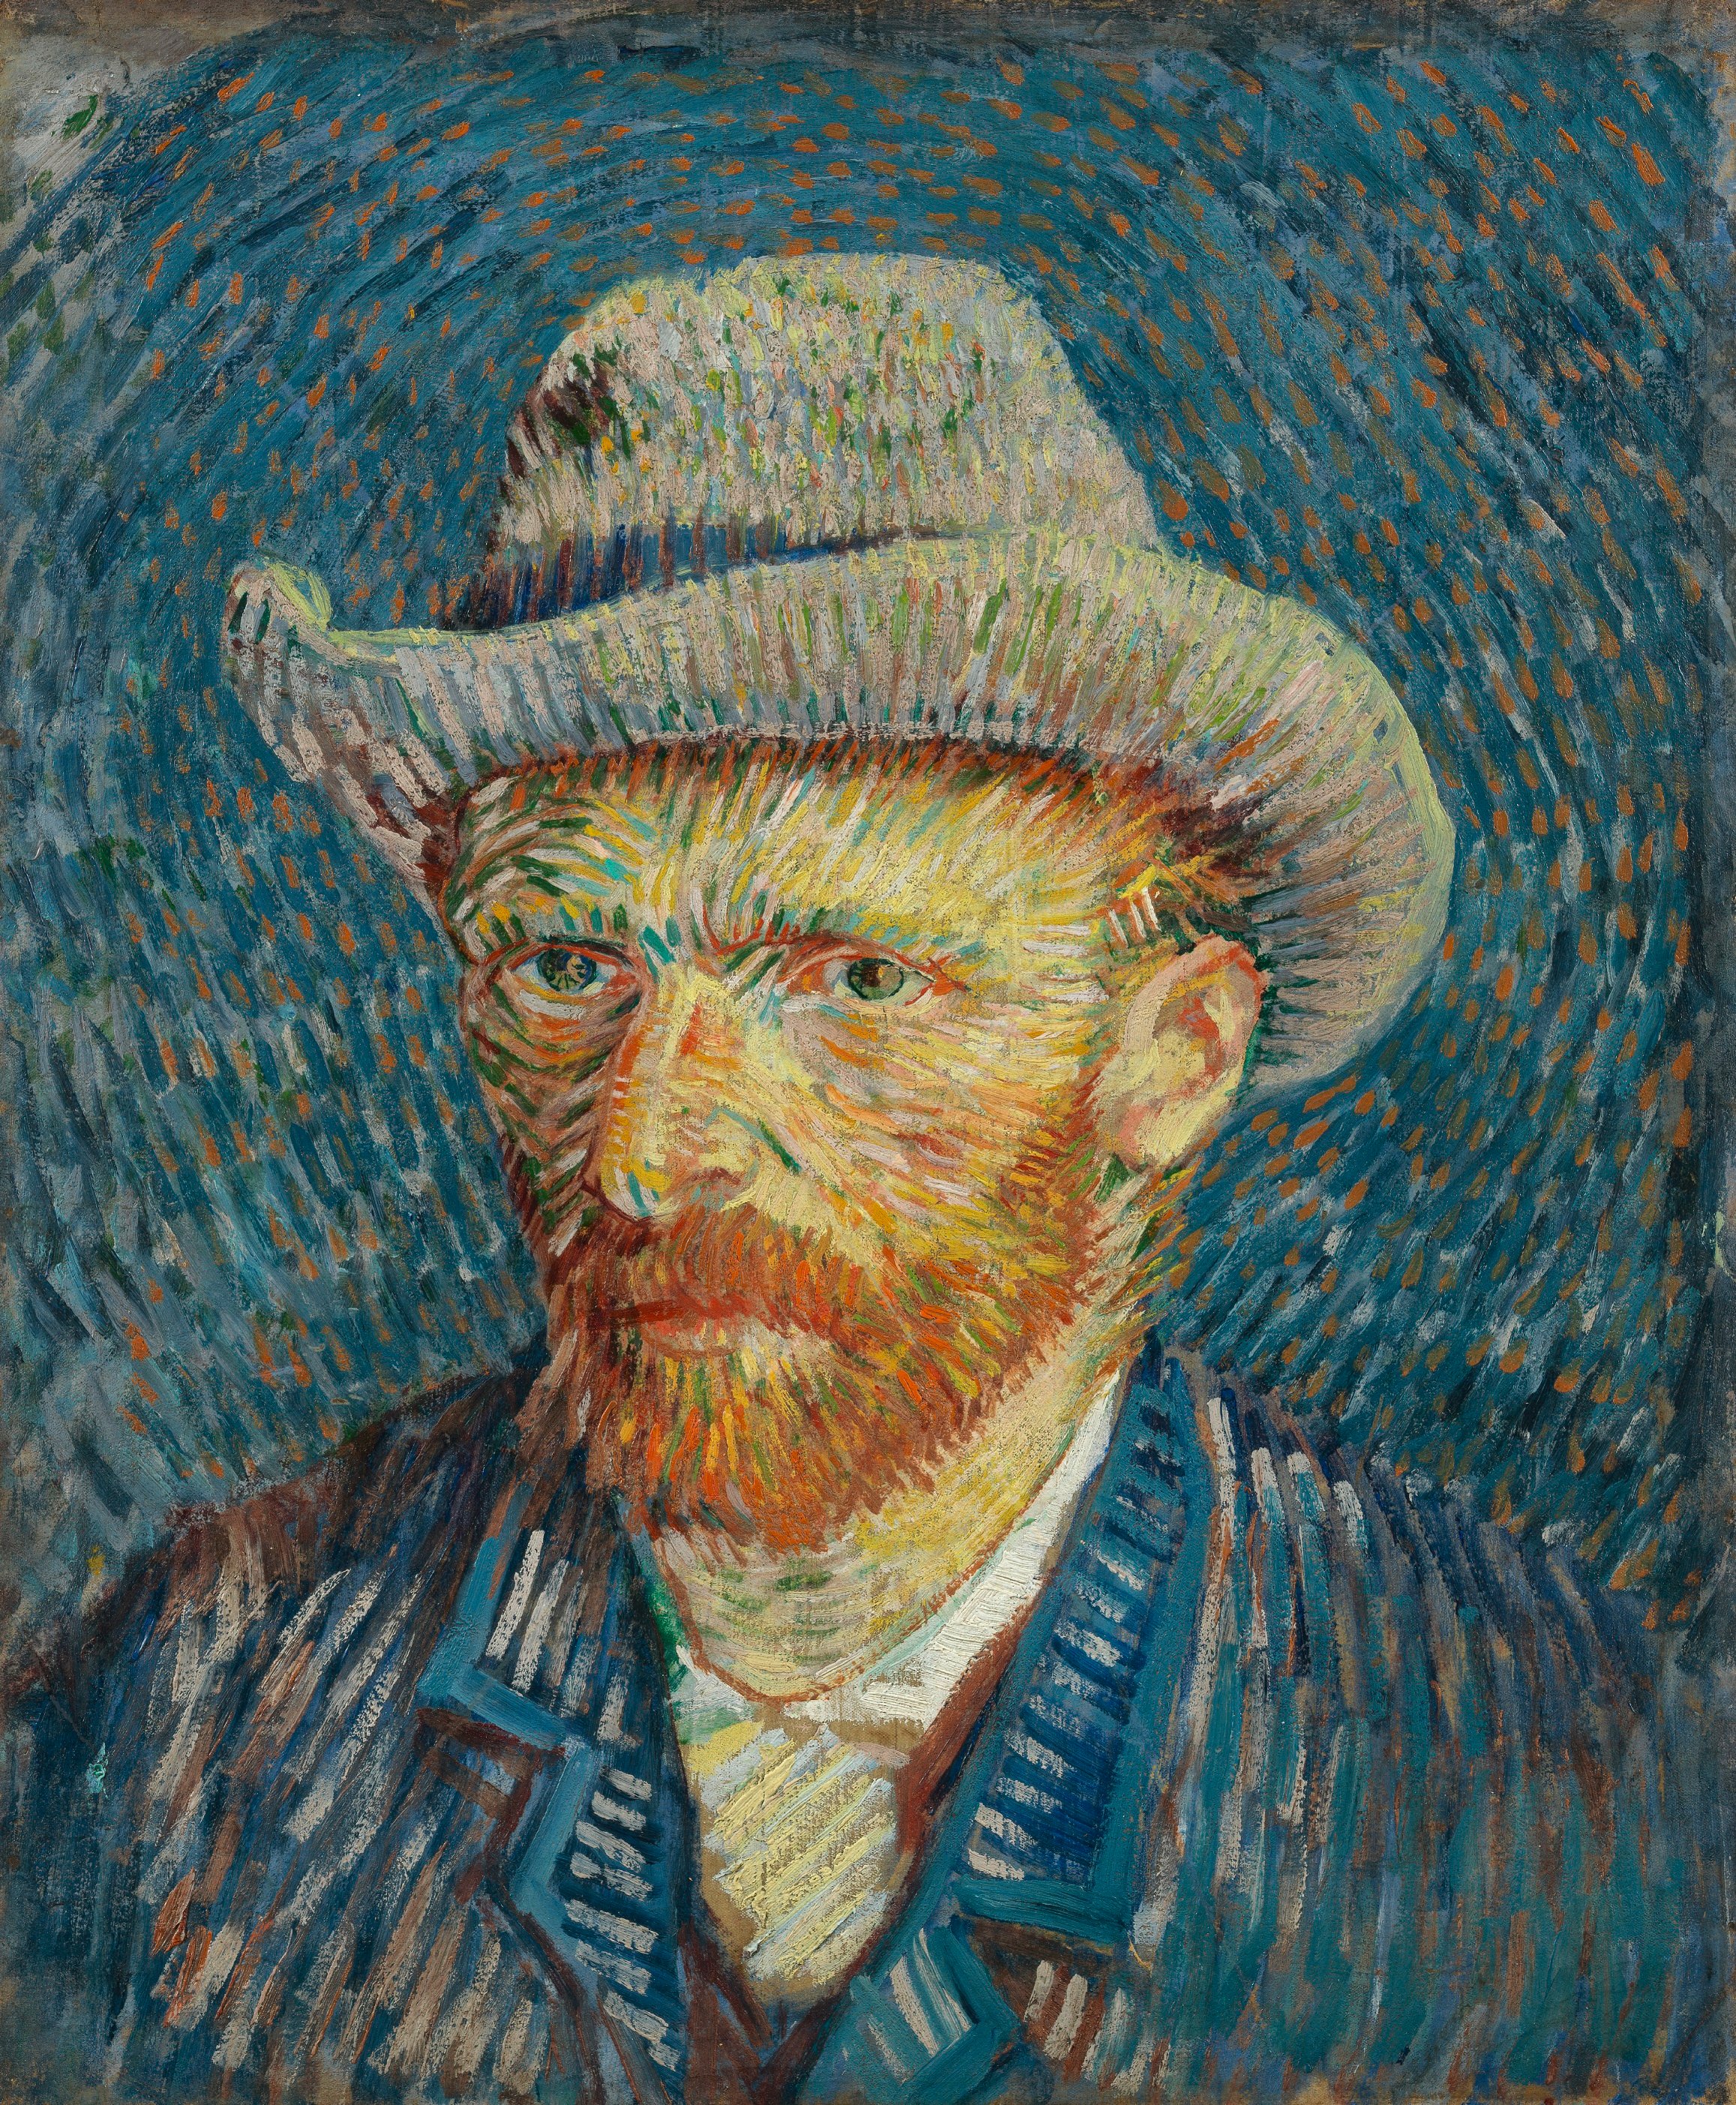 Vincent van Gogh (1853 - 1890), Self-Portrait with Grey Felt Hat, September - October 1887, Van Gogh Museum, Amsterdam (Vincent van Gogh Foundation)